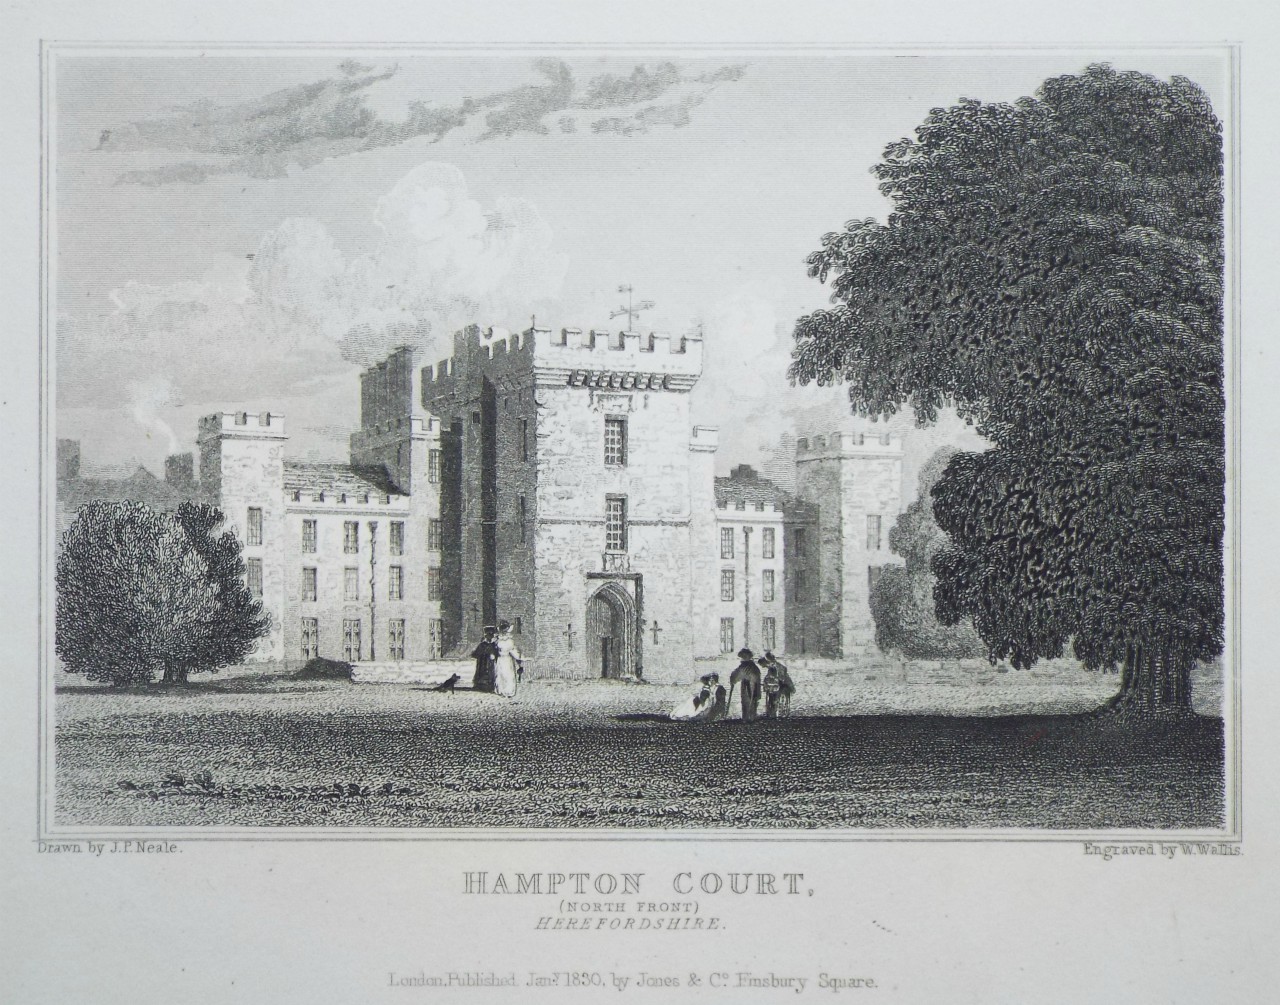 Print - Hampton Court, (North Front) Herefordshire. - Bond